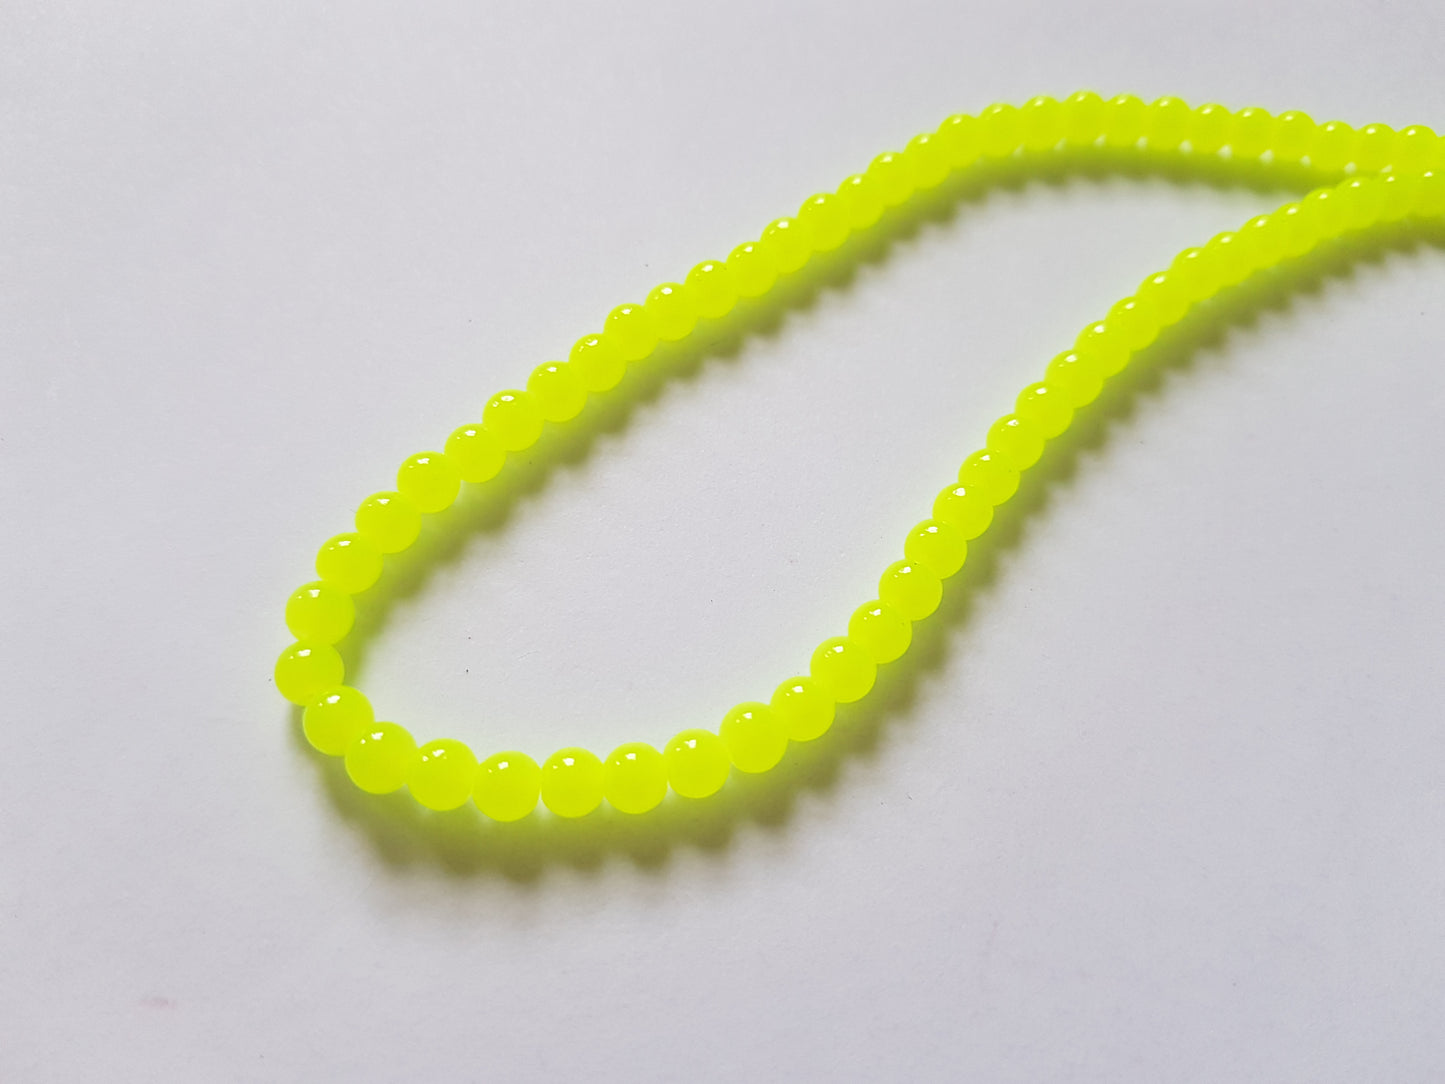 4mm imitation jade glass beads - yellow